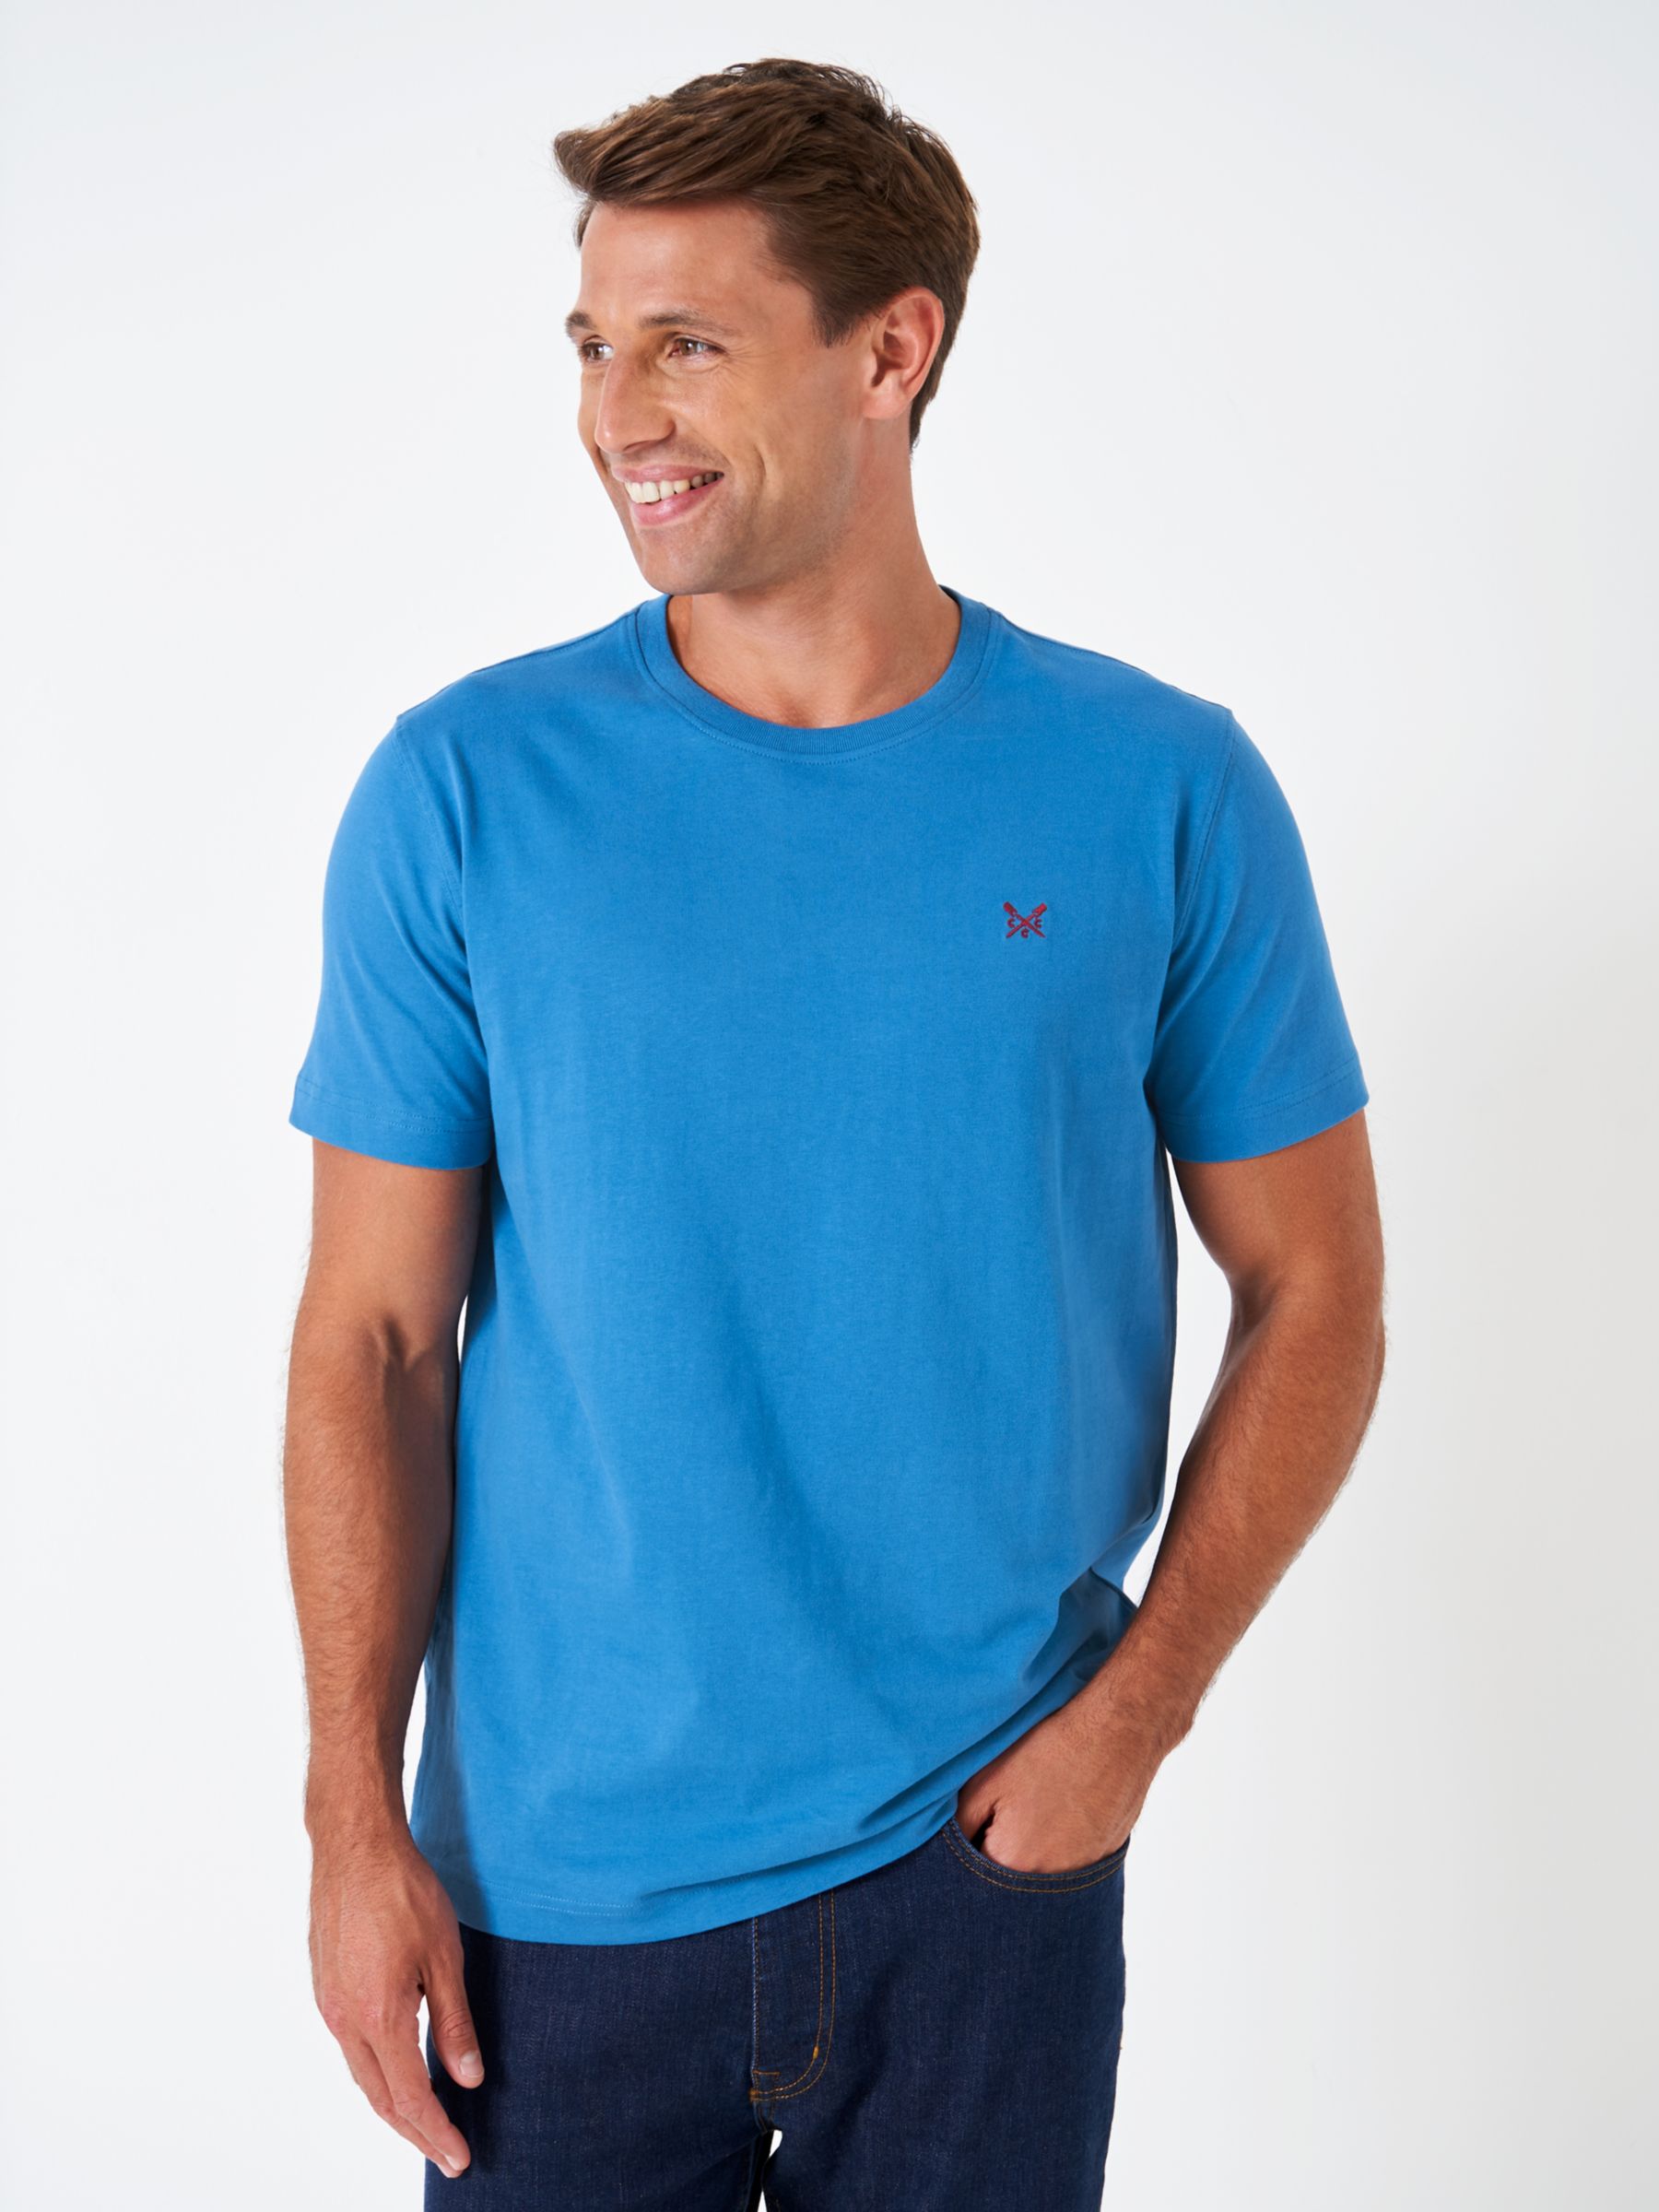 Crew Clothing Crew Neck T-Shirt, Bright Blue at John Lewis & Partners